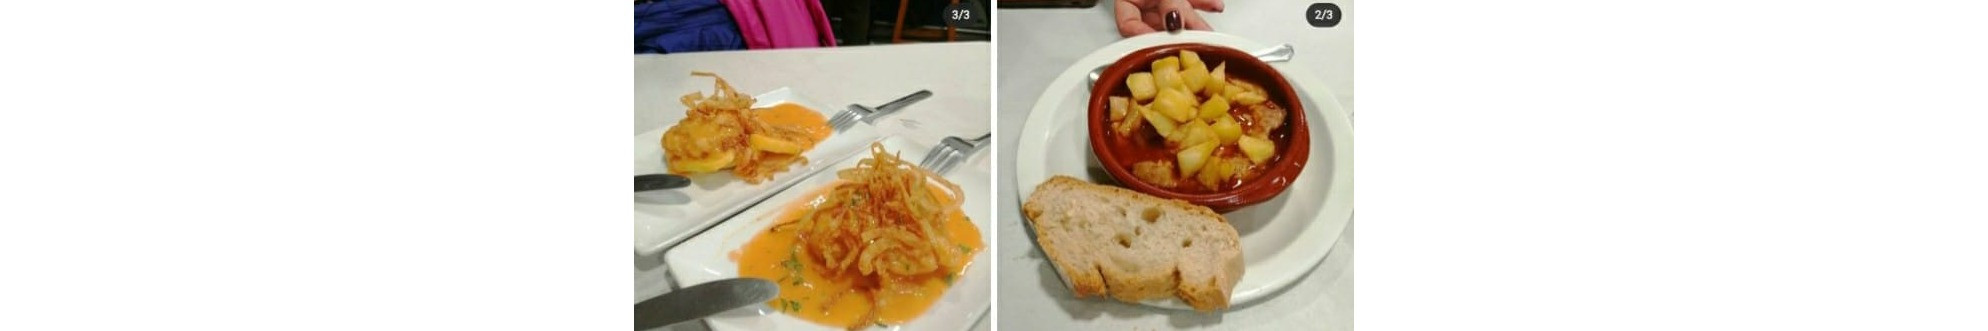 Restaurante La Asturiana